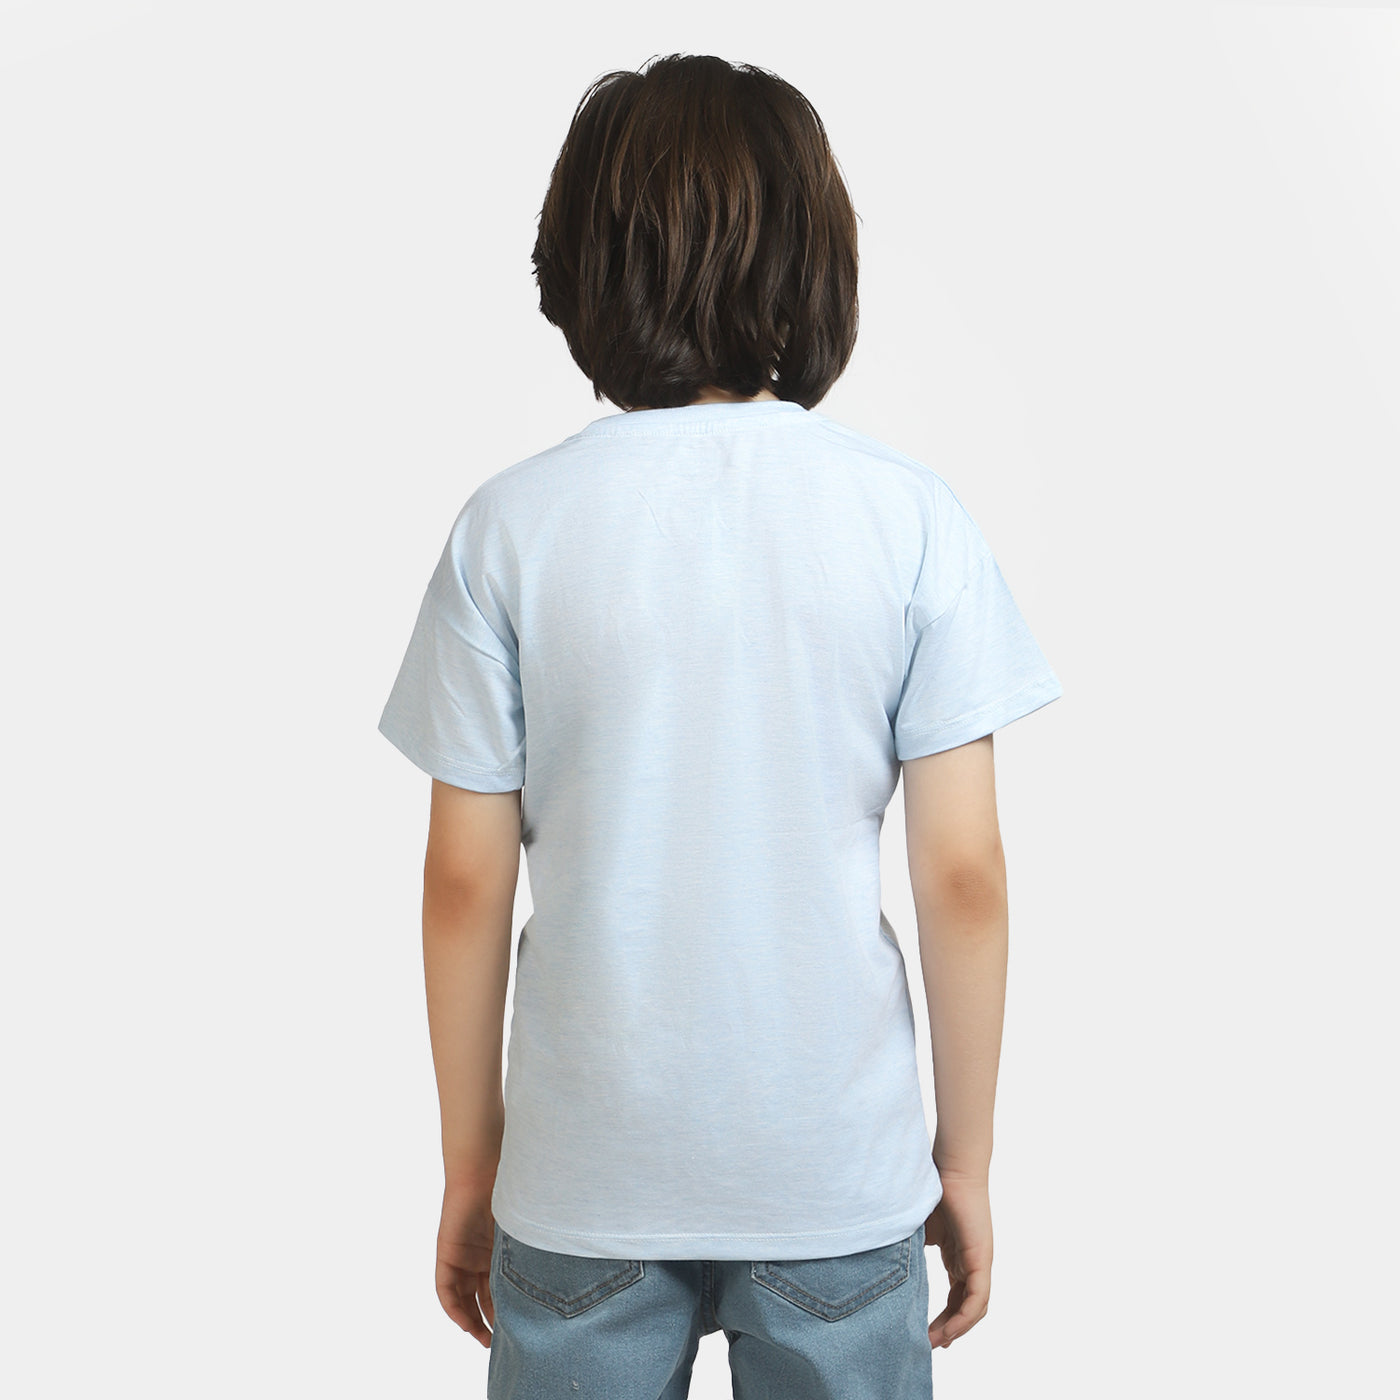 Boys Cotton T-Shirt Character - L-Blue